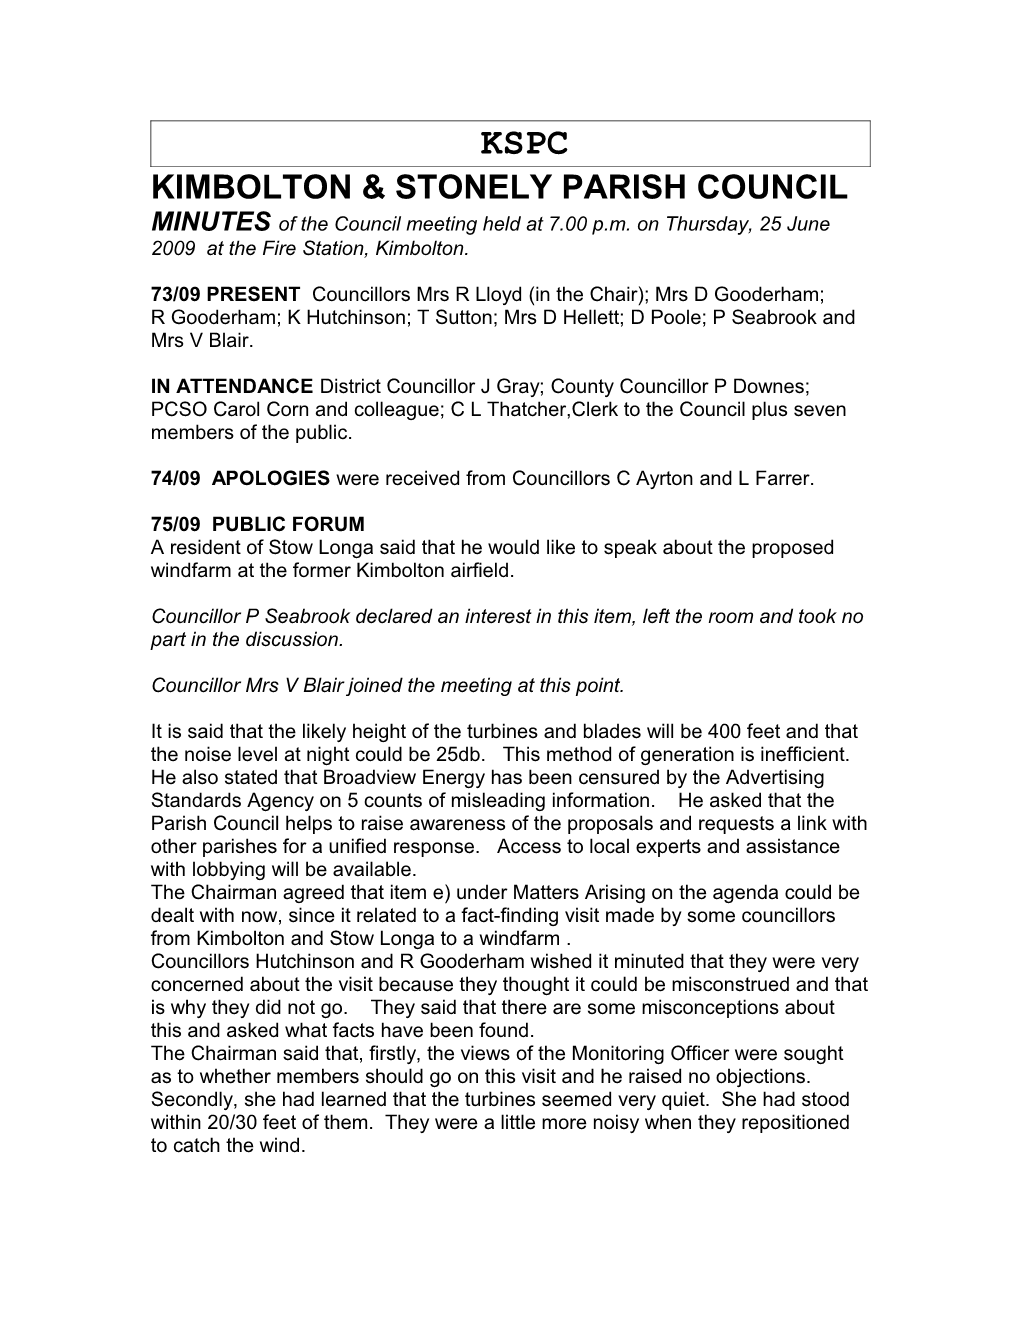 Kimbolton & Stonely Parish Council s4